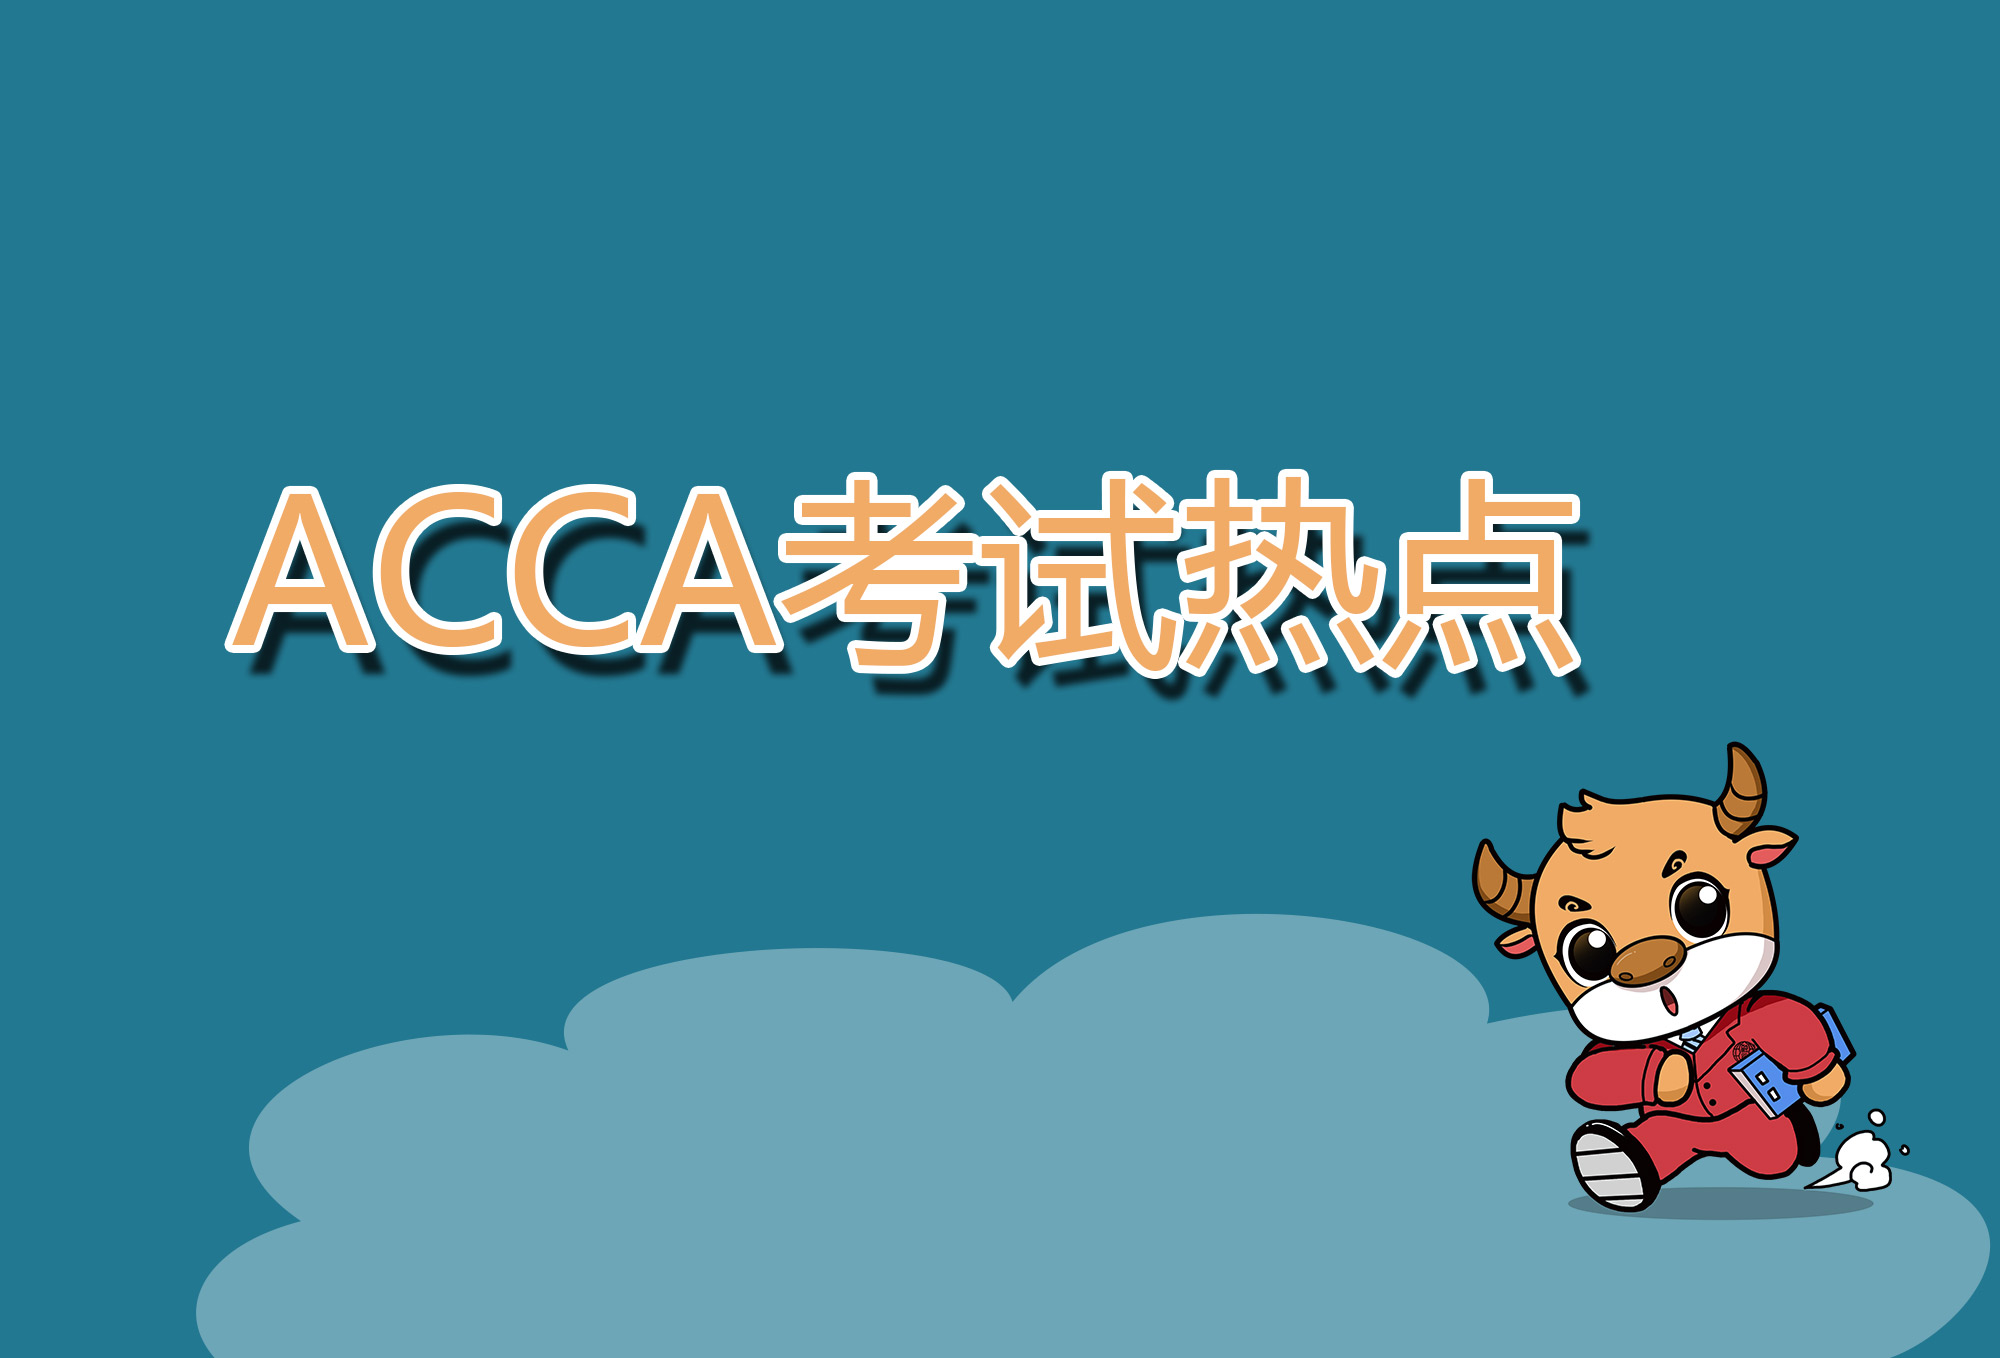 ACCA考试知识点investment appraisal包含哪些内容？